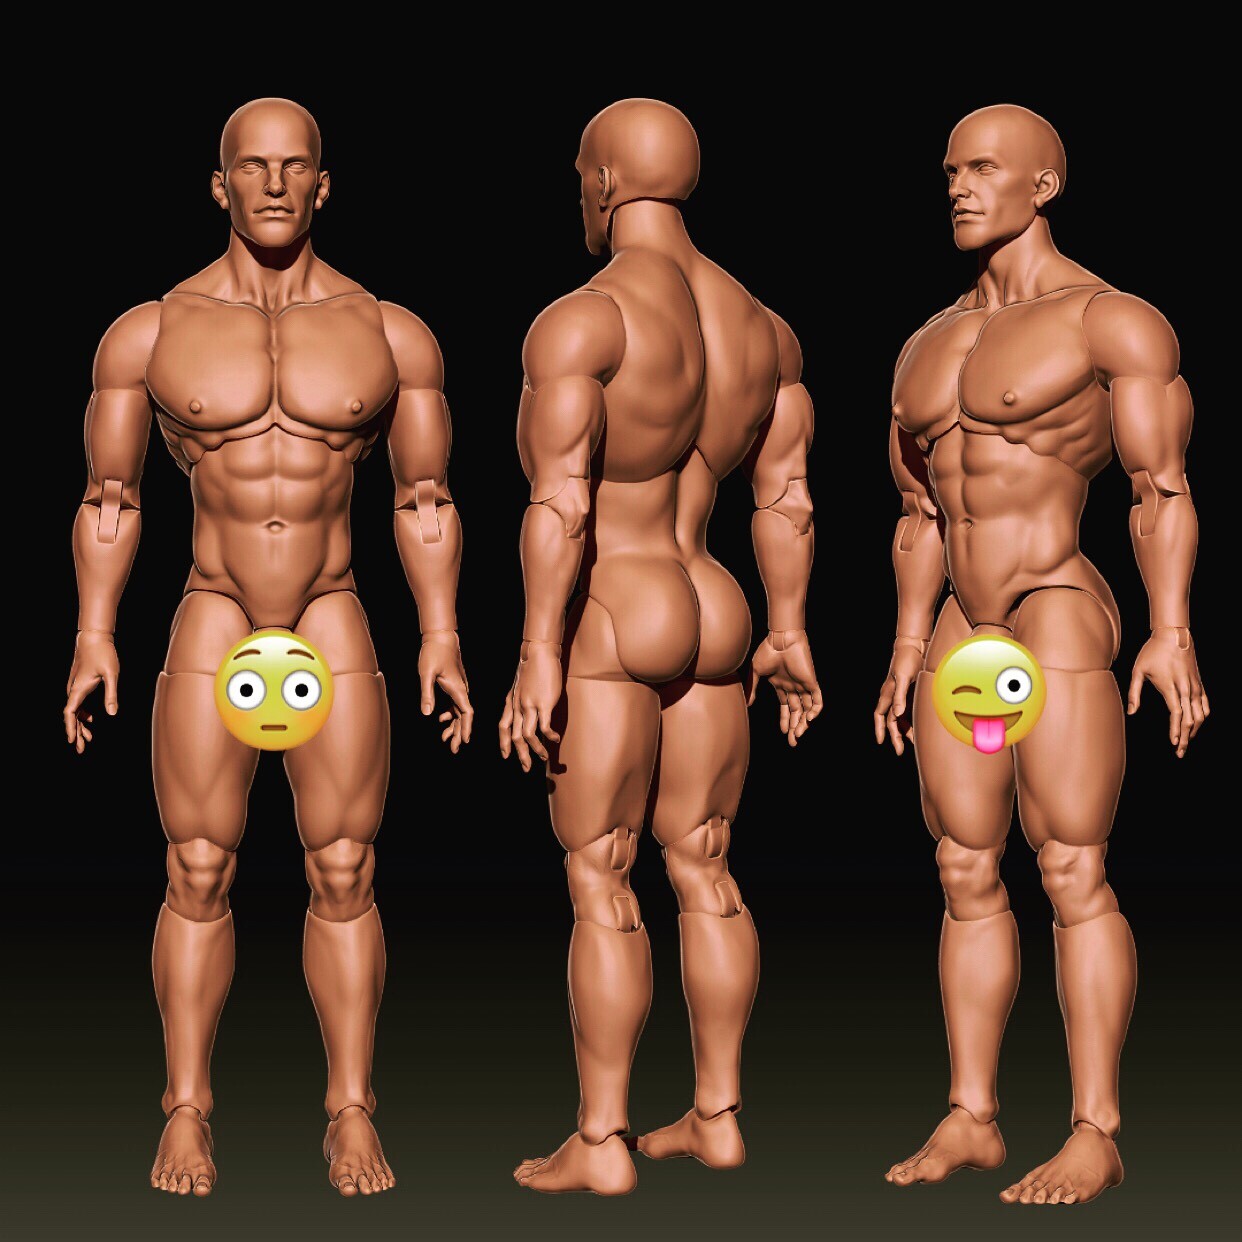 Thomas Pease - Nude male action figure.